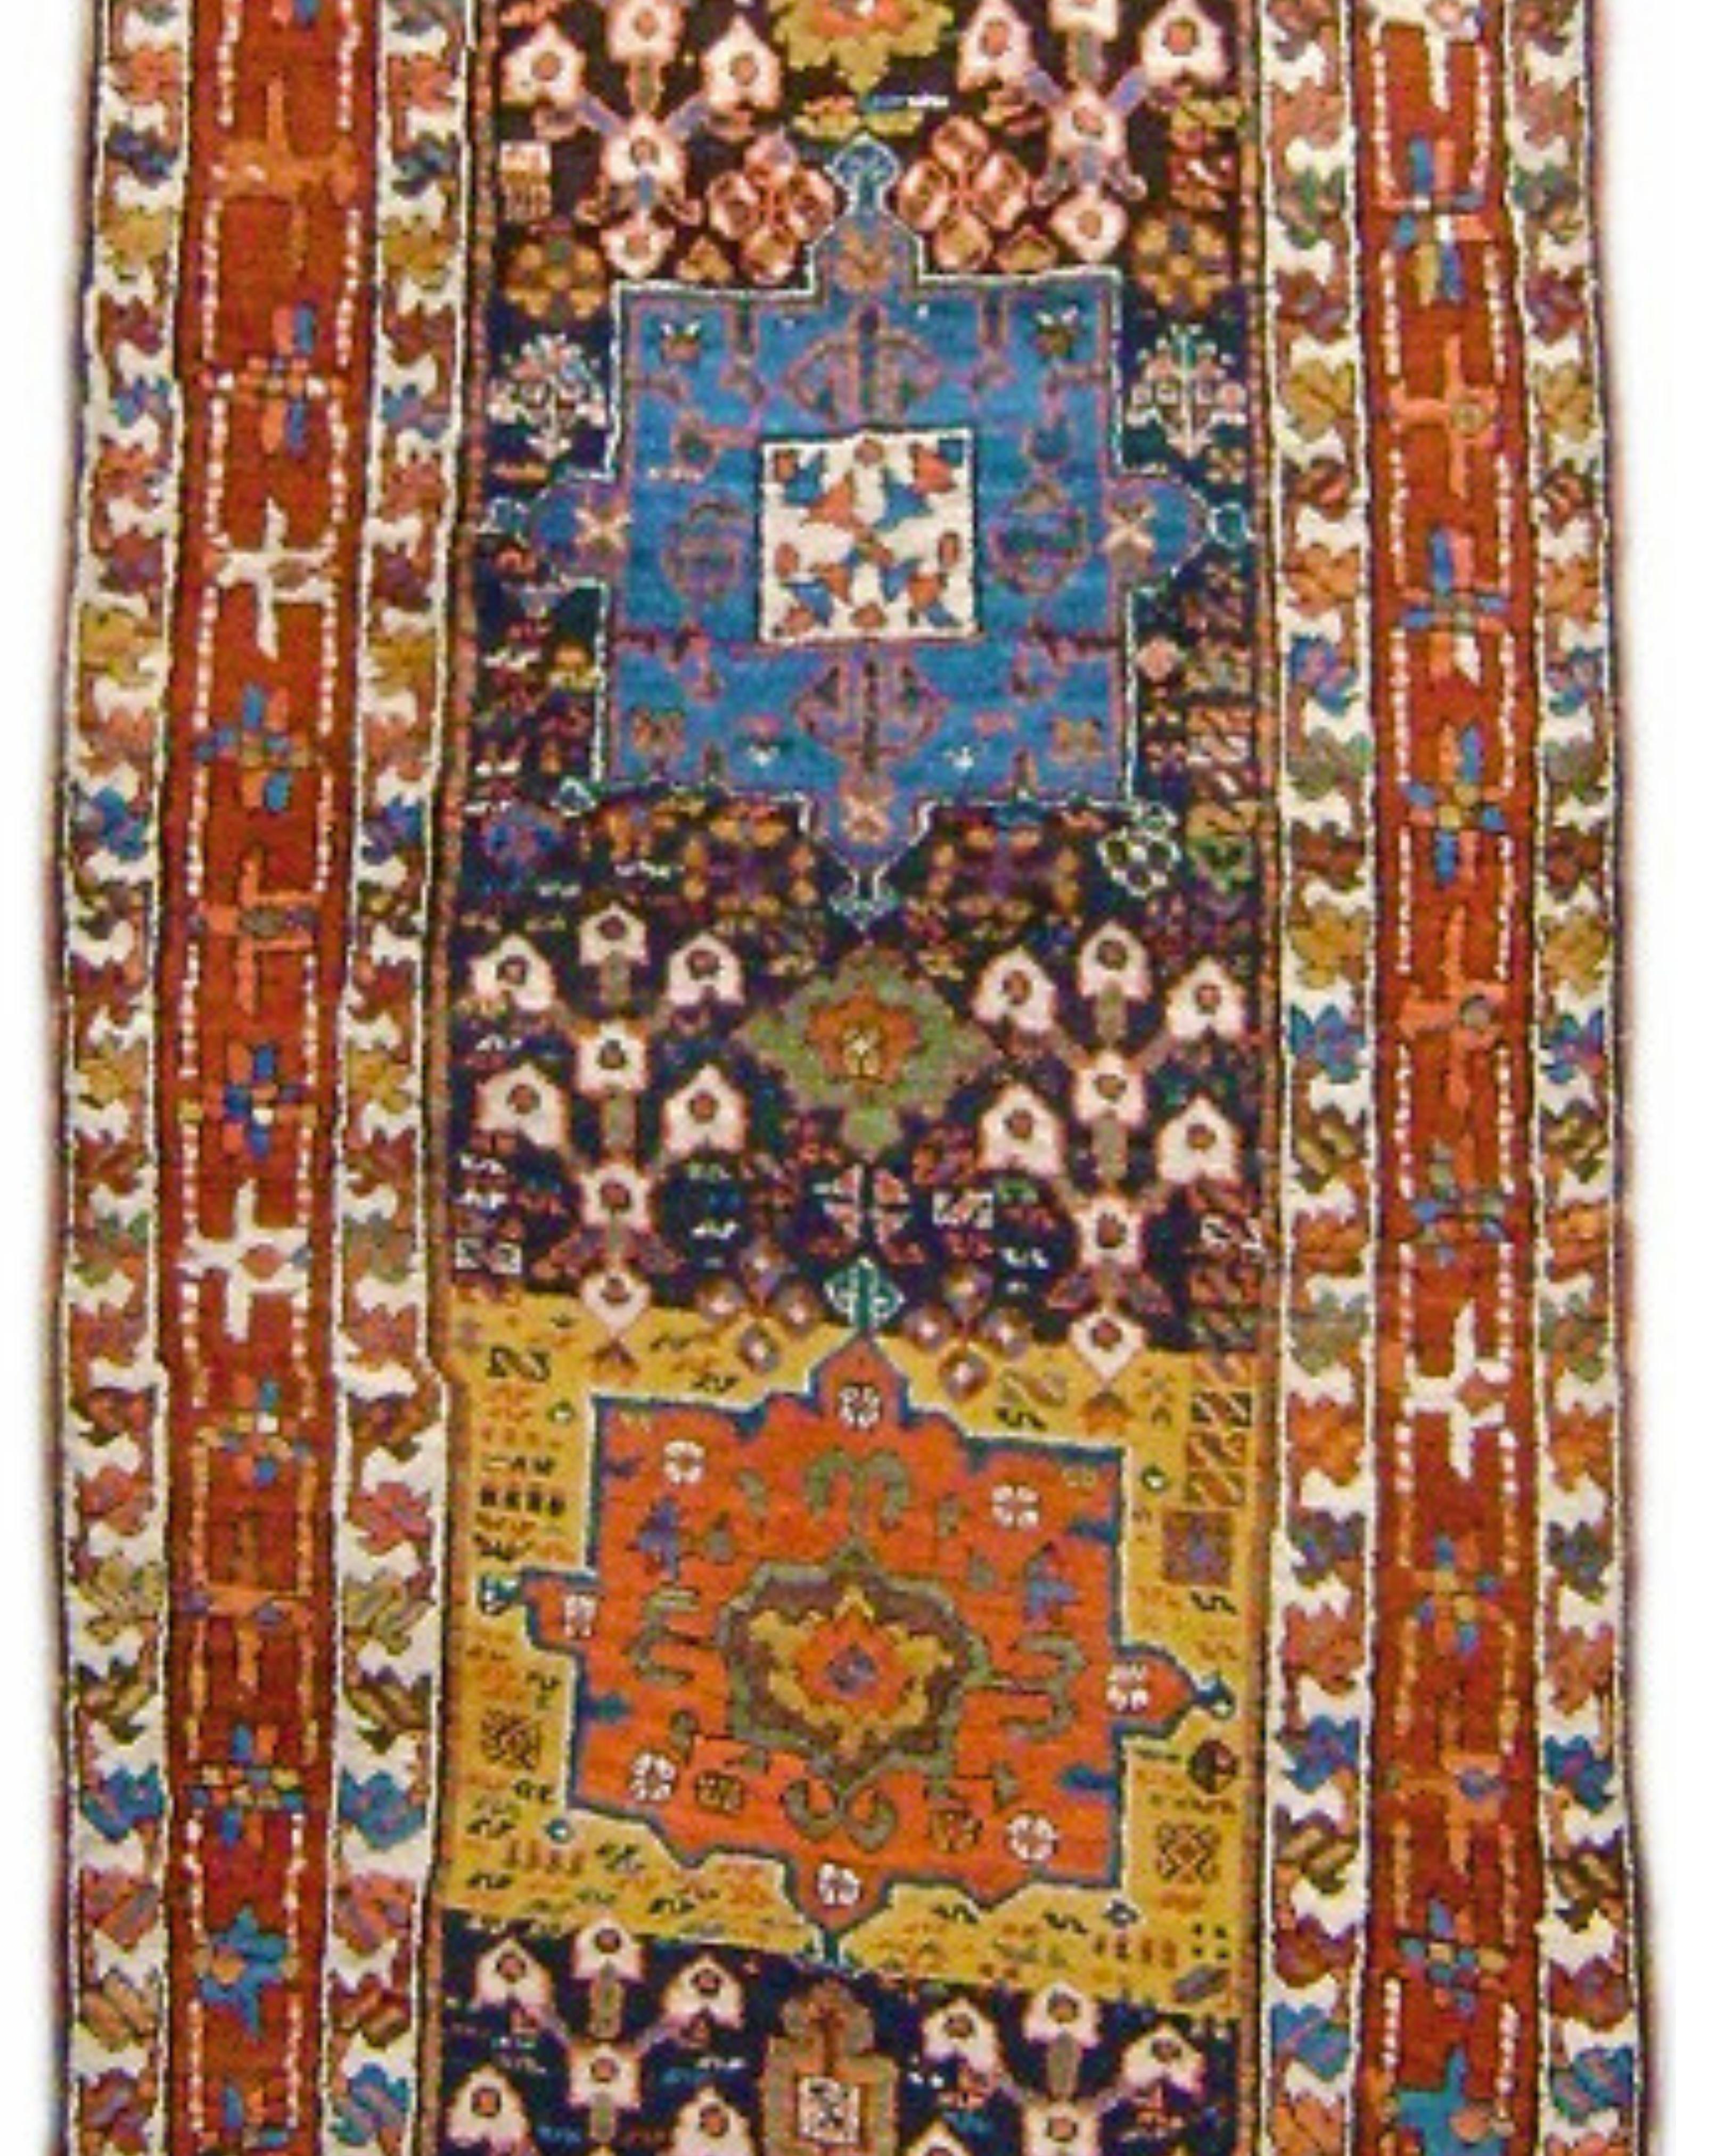 watercolor rugs